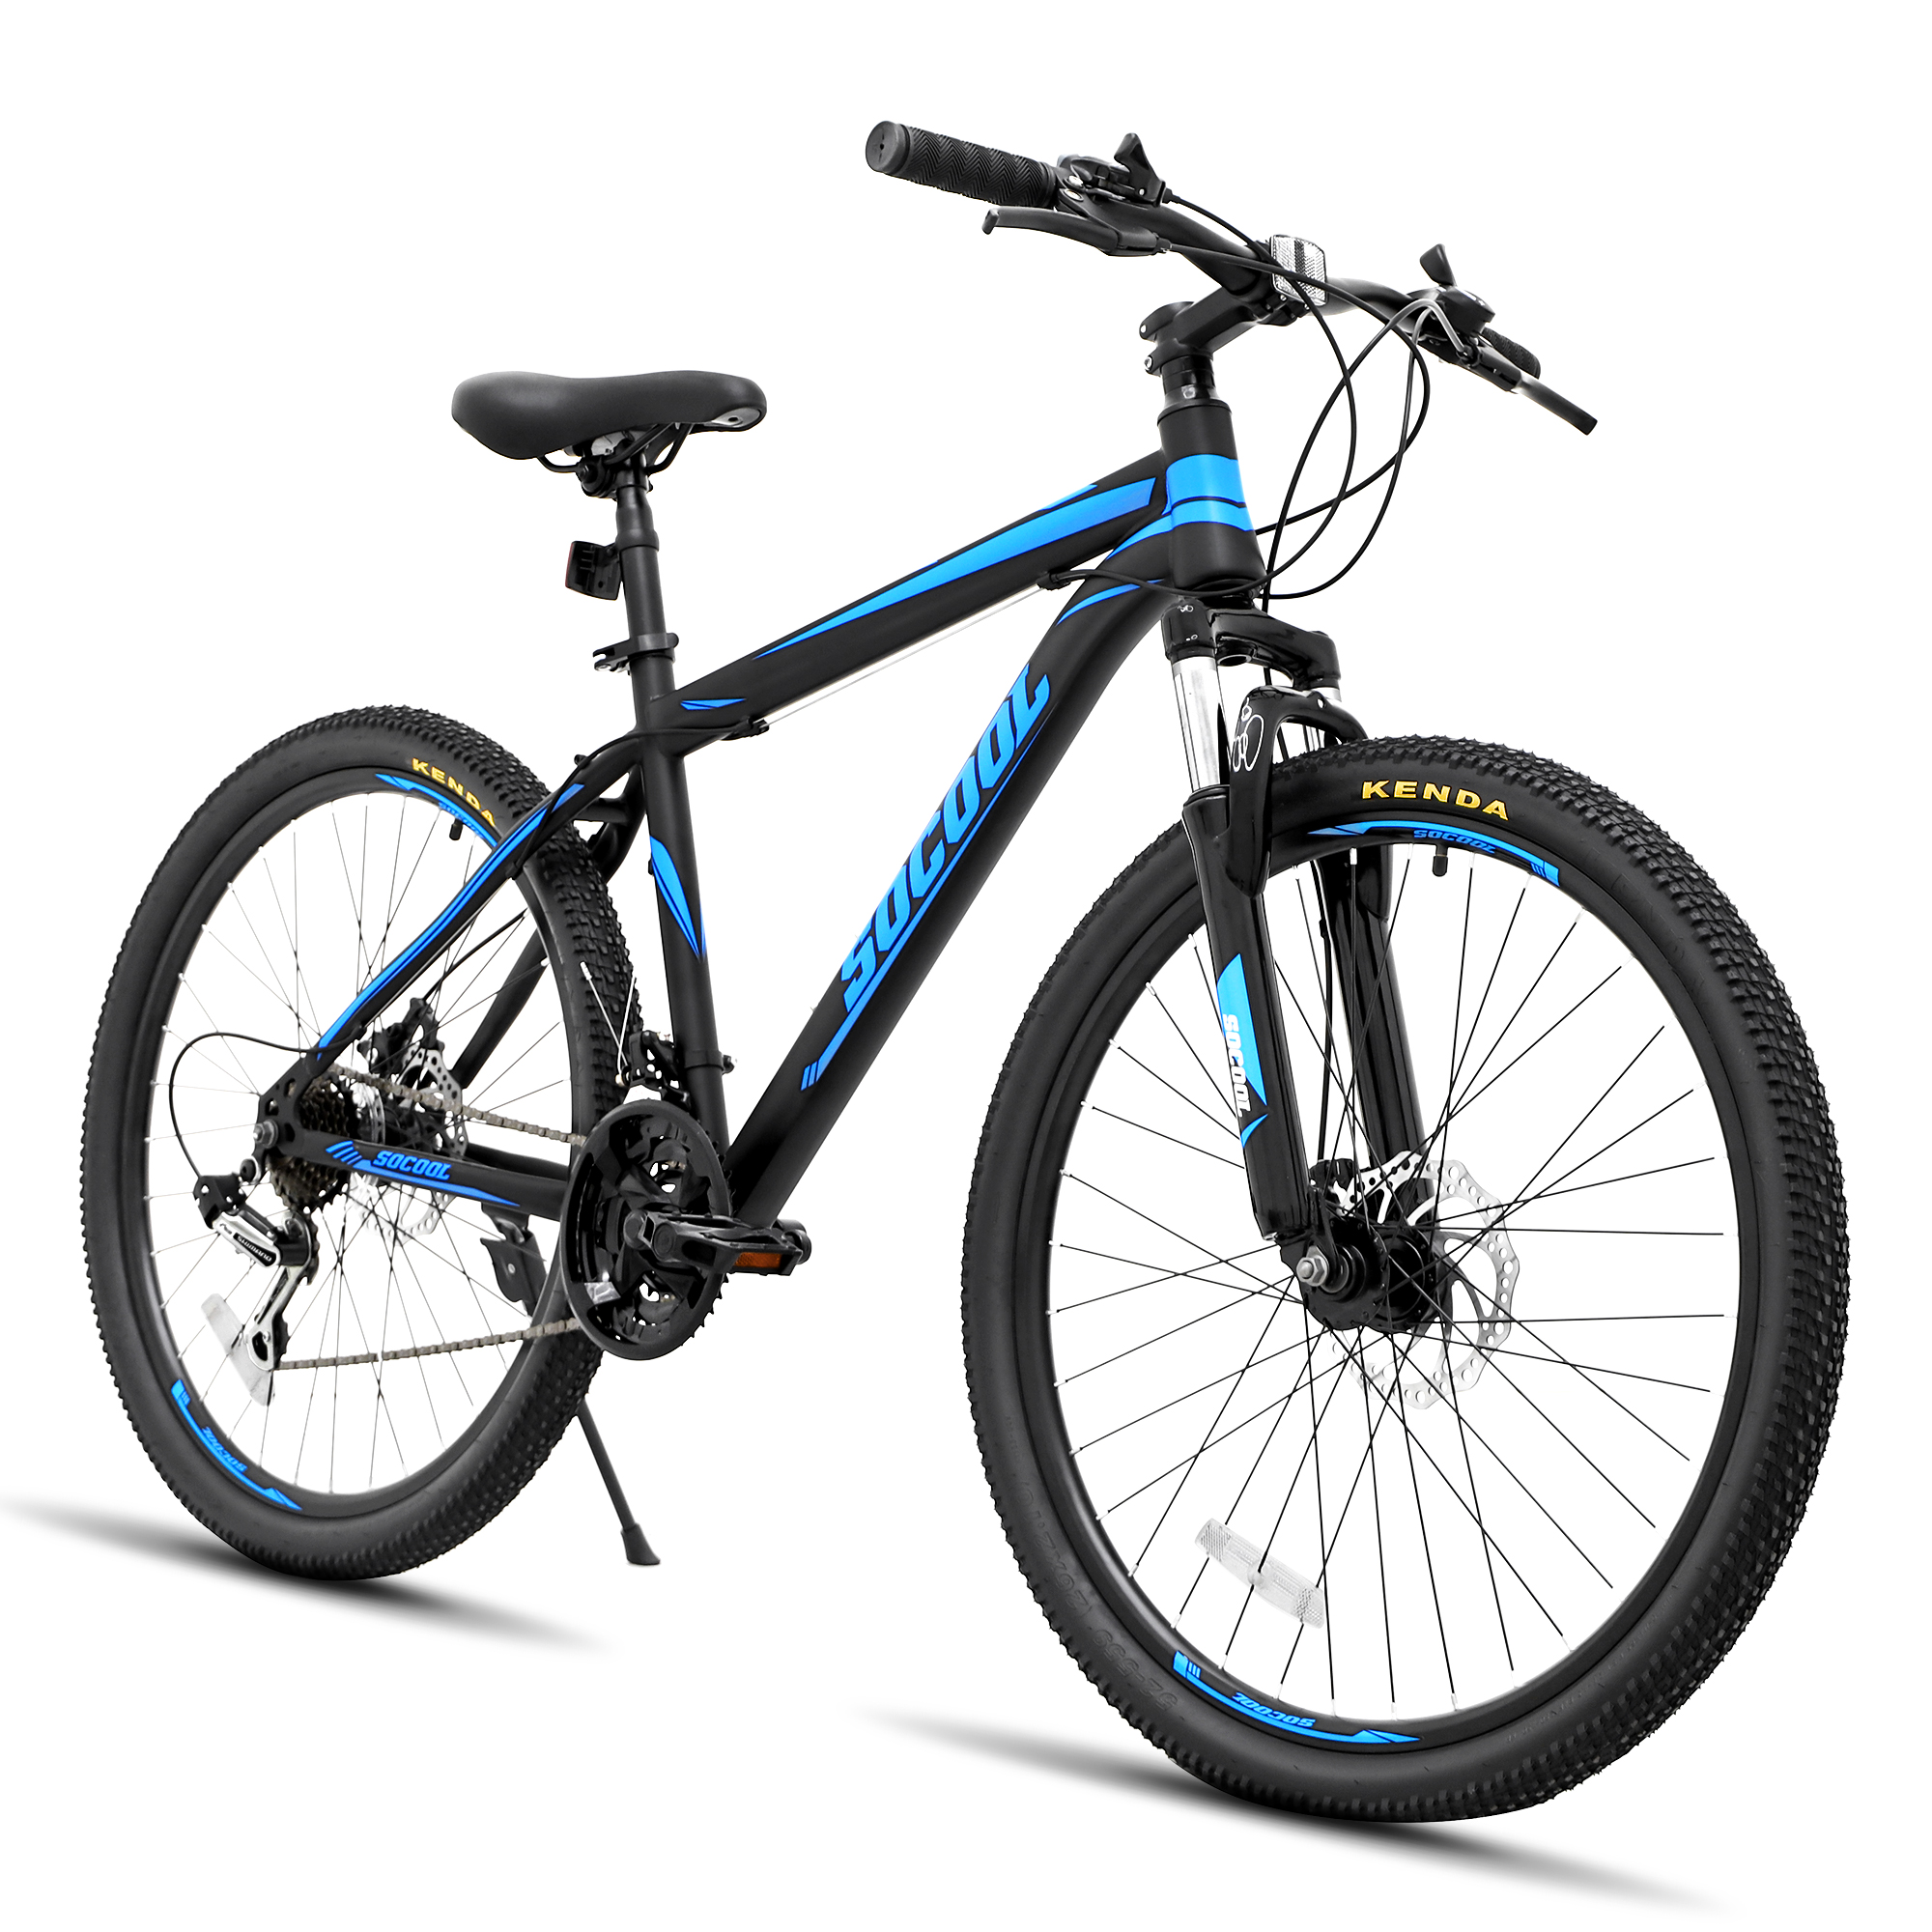 SOCOOL Mens and Womens Road Bike, 26-Inch Wheels, Lightweight Aluminum Frame -Black & Blue, KP1690BK - image 1 of 9